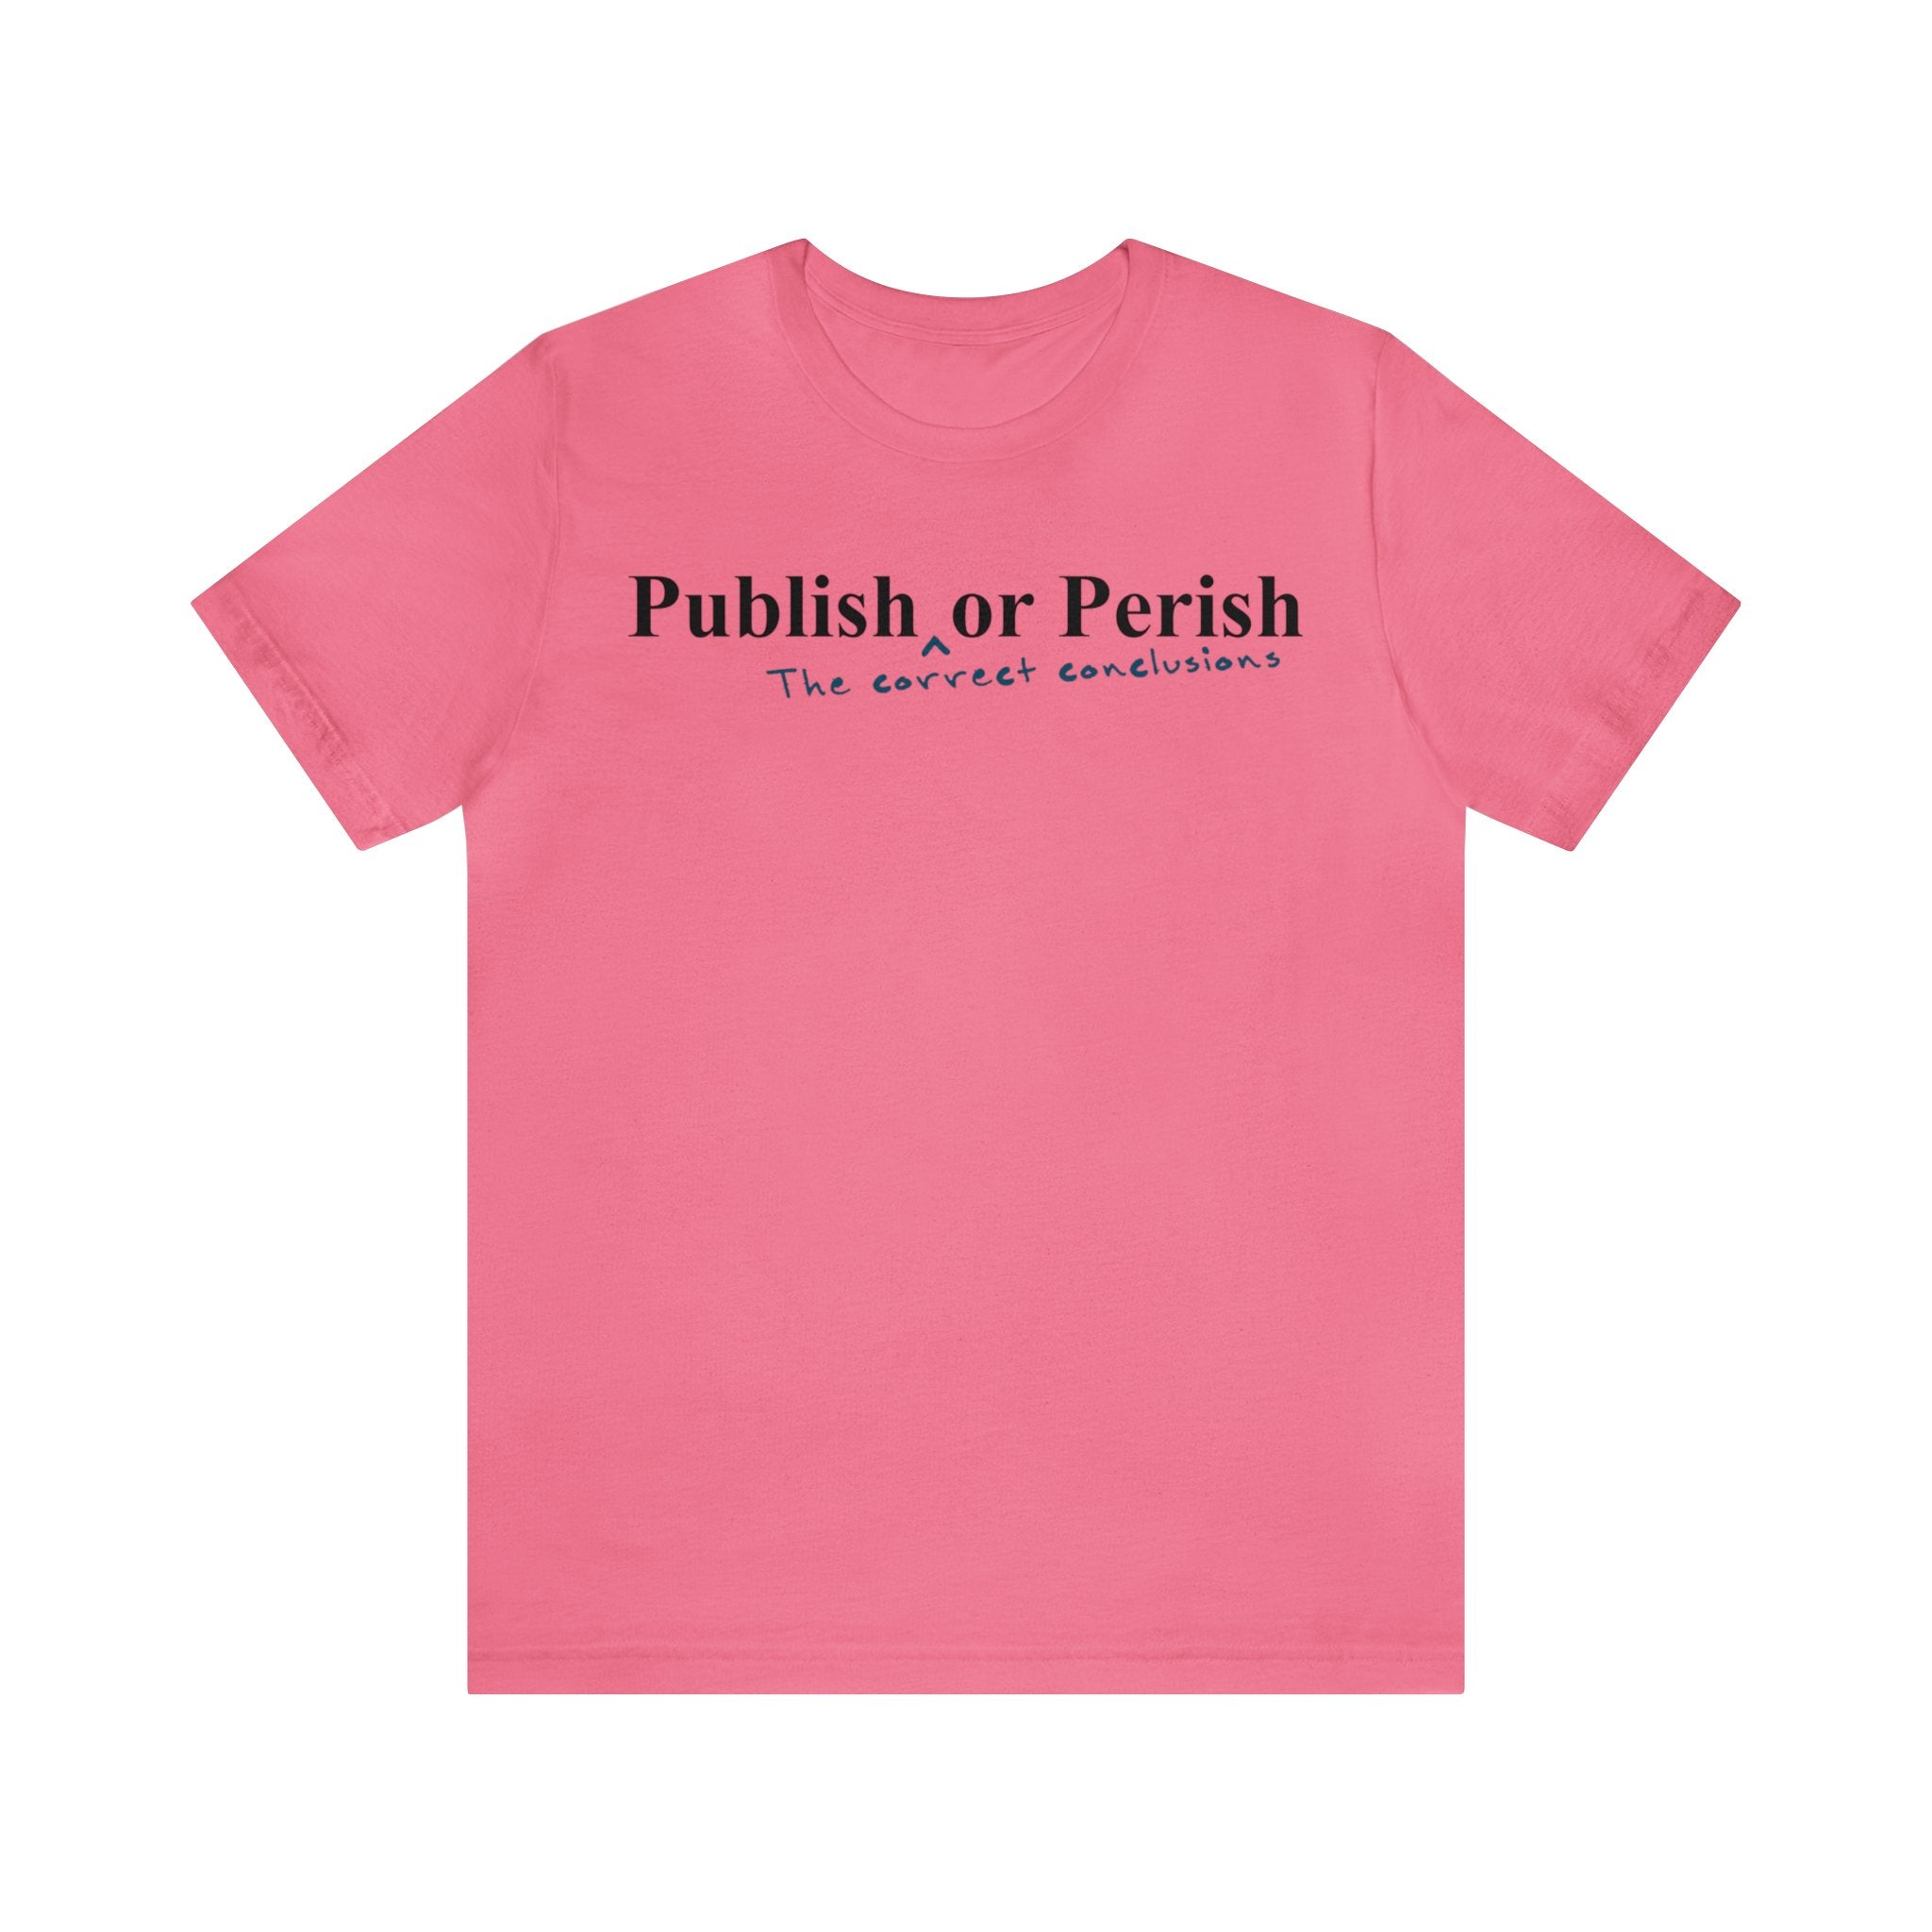 Publish _the correct conclusions_ or Perish